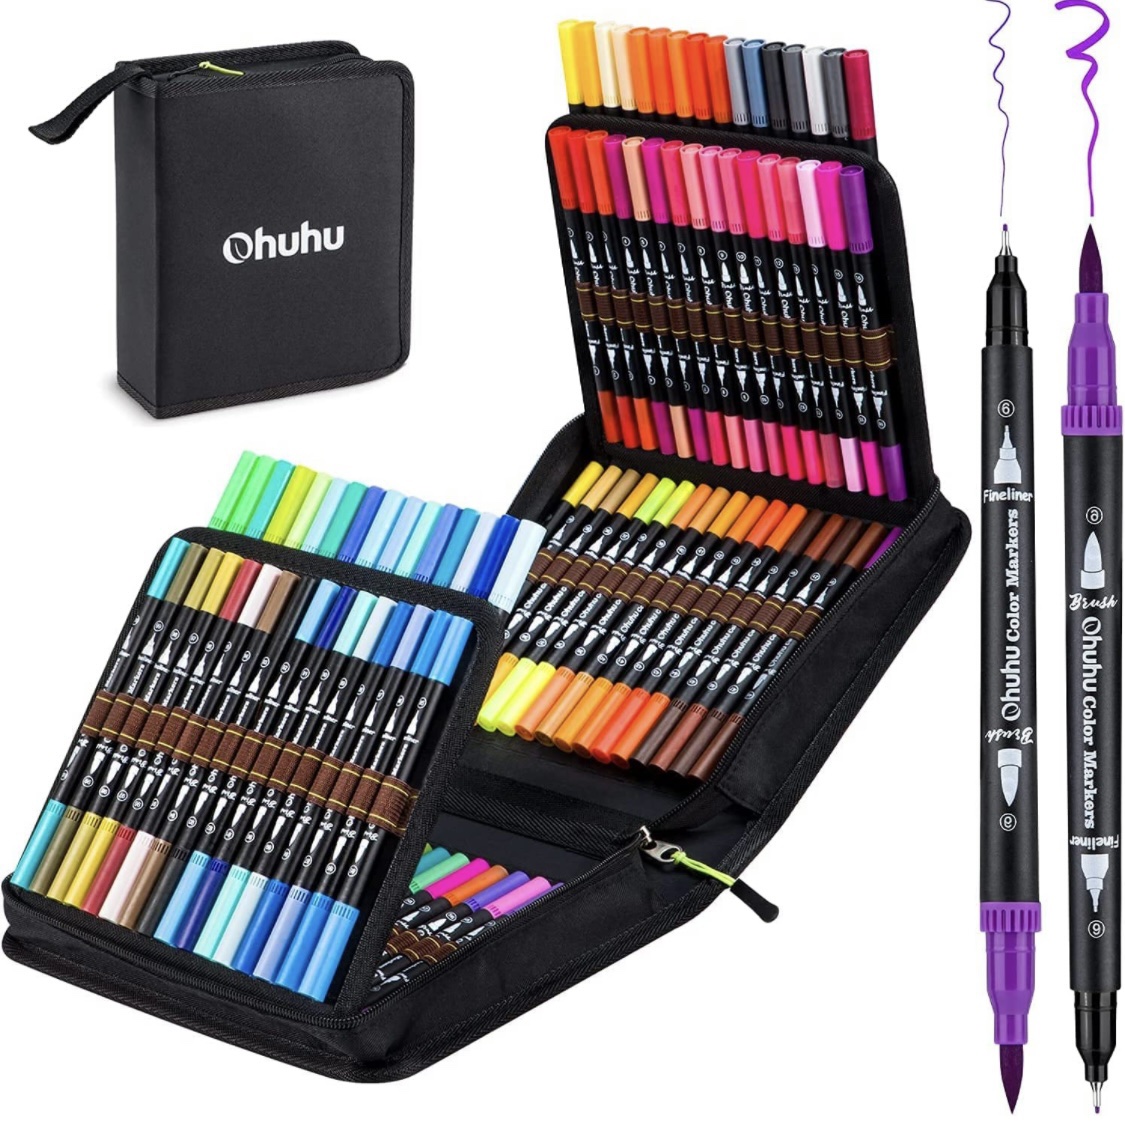 Ohuhu 120 colors water based marker set - Brush & Fineliner artlantis